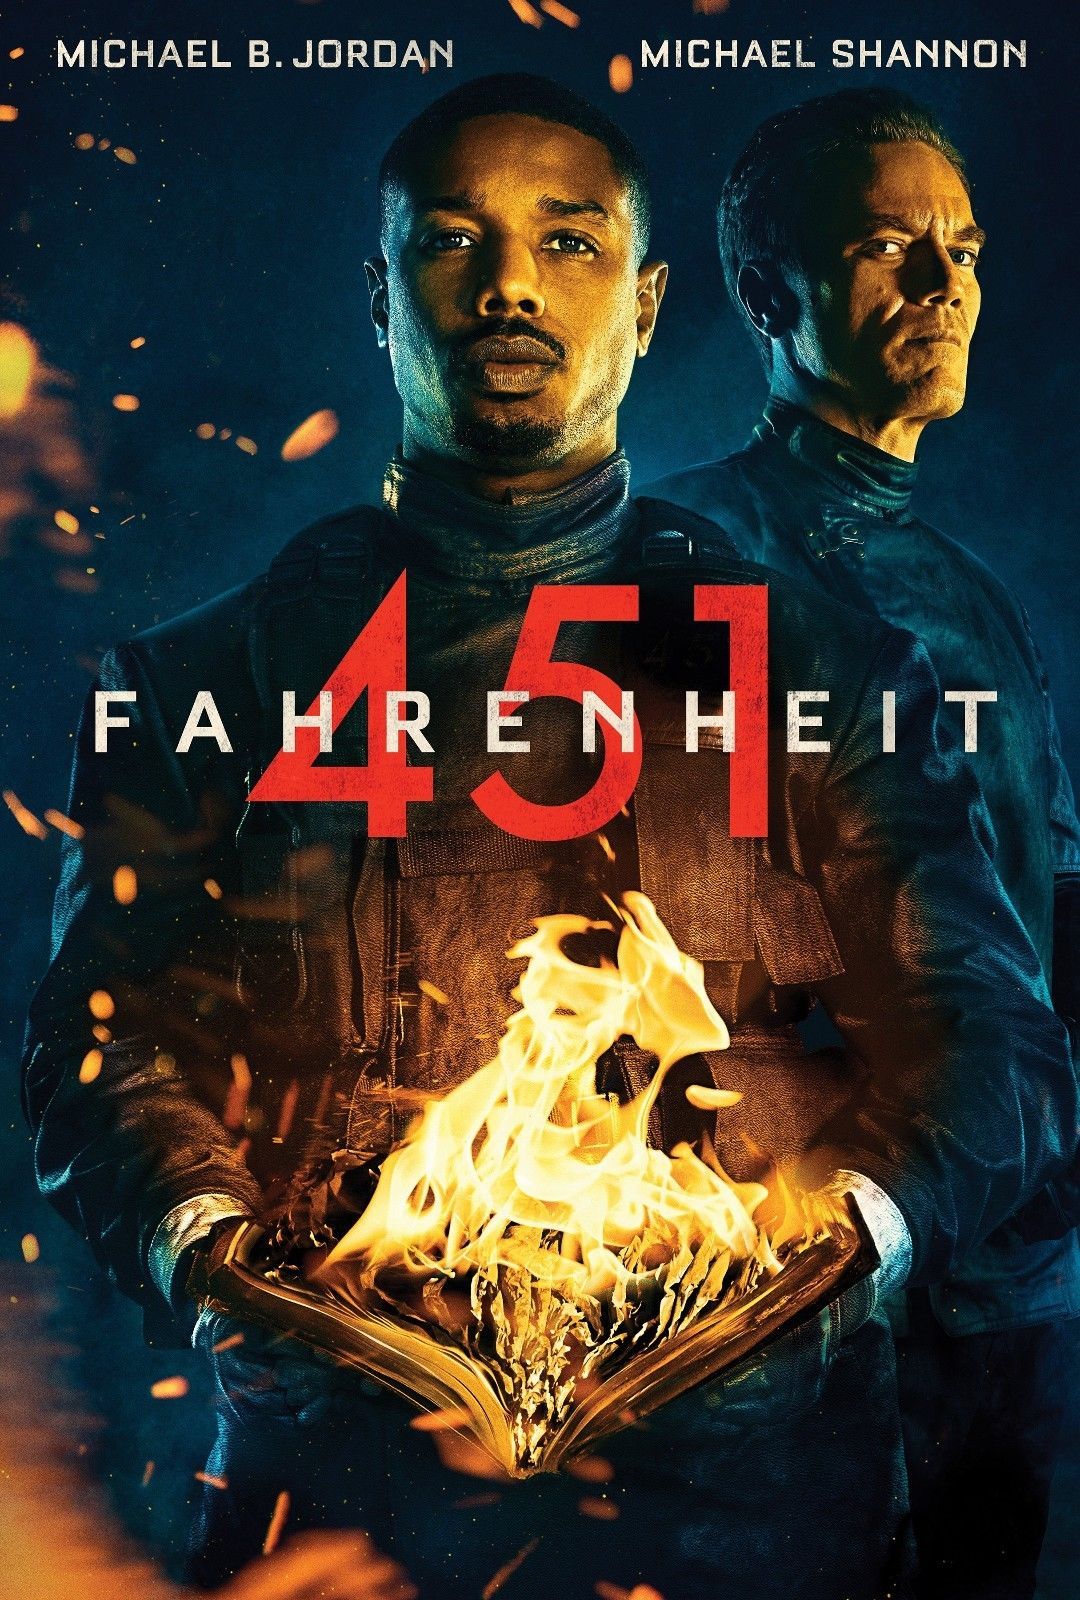 Fahrenheit 451 Movie Poster Michael B. Jordan Michael Shannon Film Print 27x40" - $11.90 - $24.90